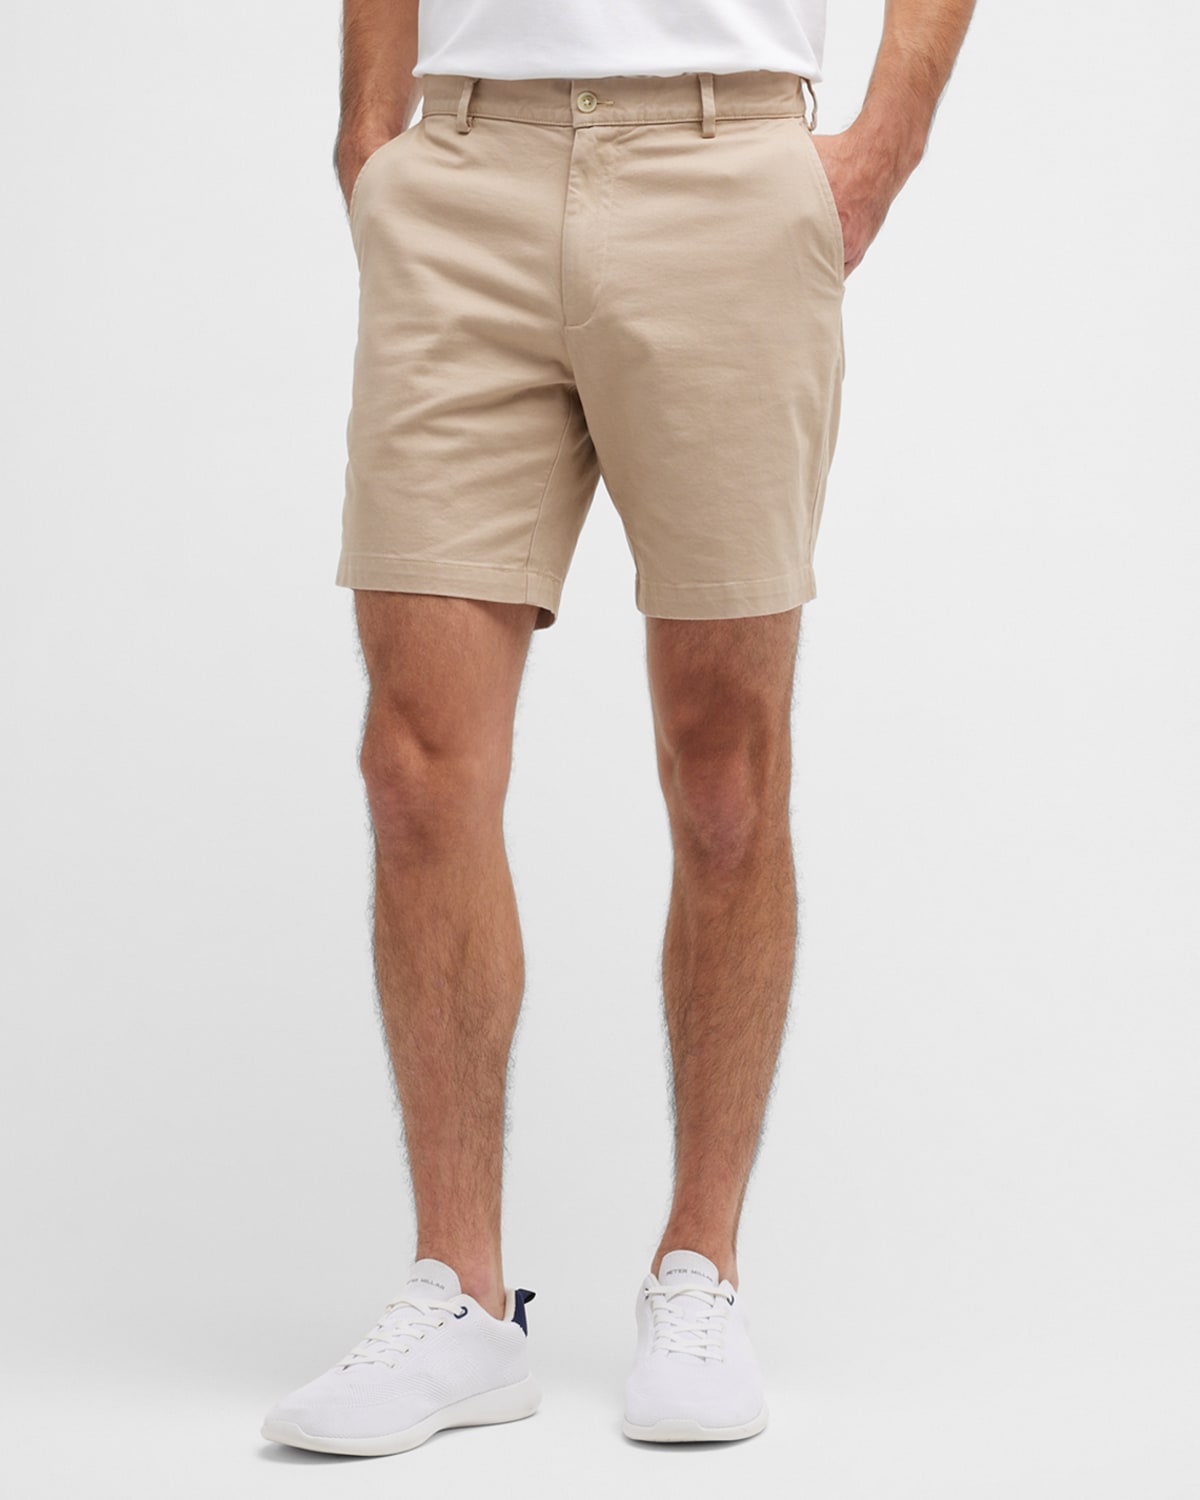 Men's Pilot Flat Front Shorts